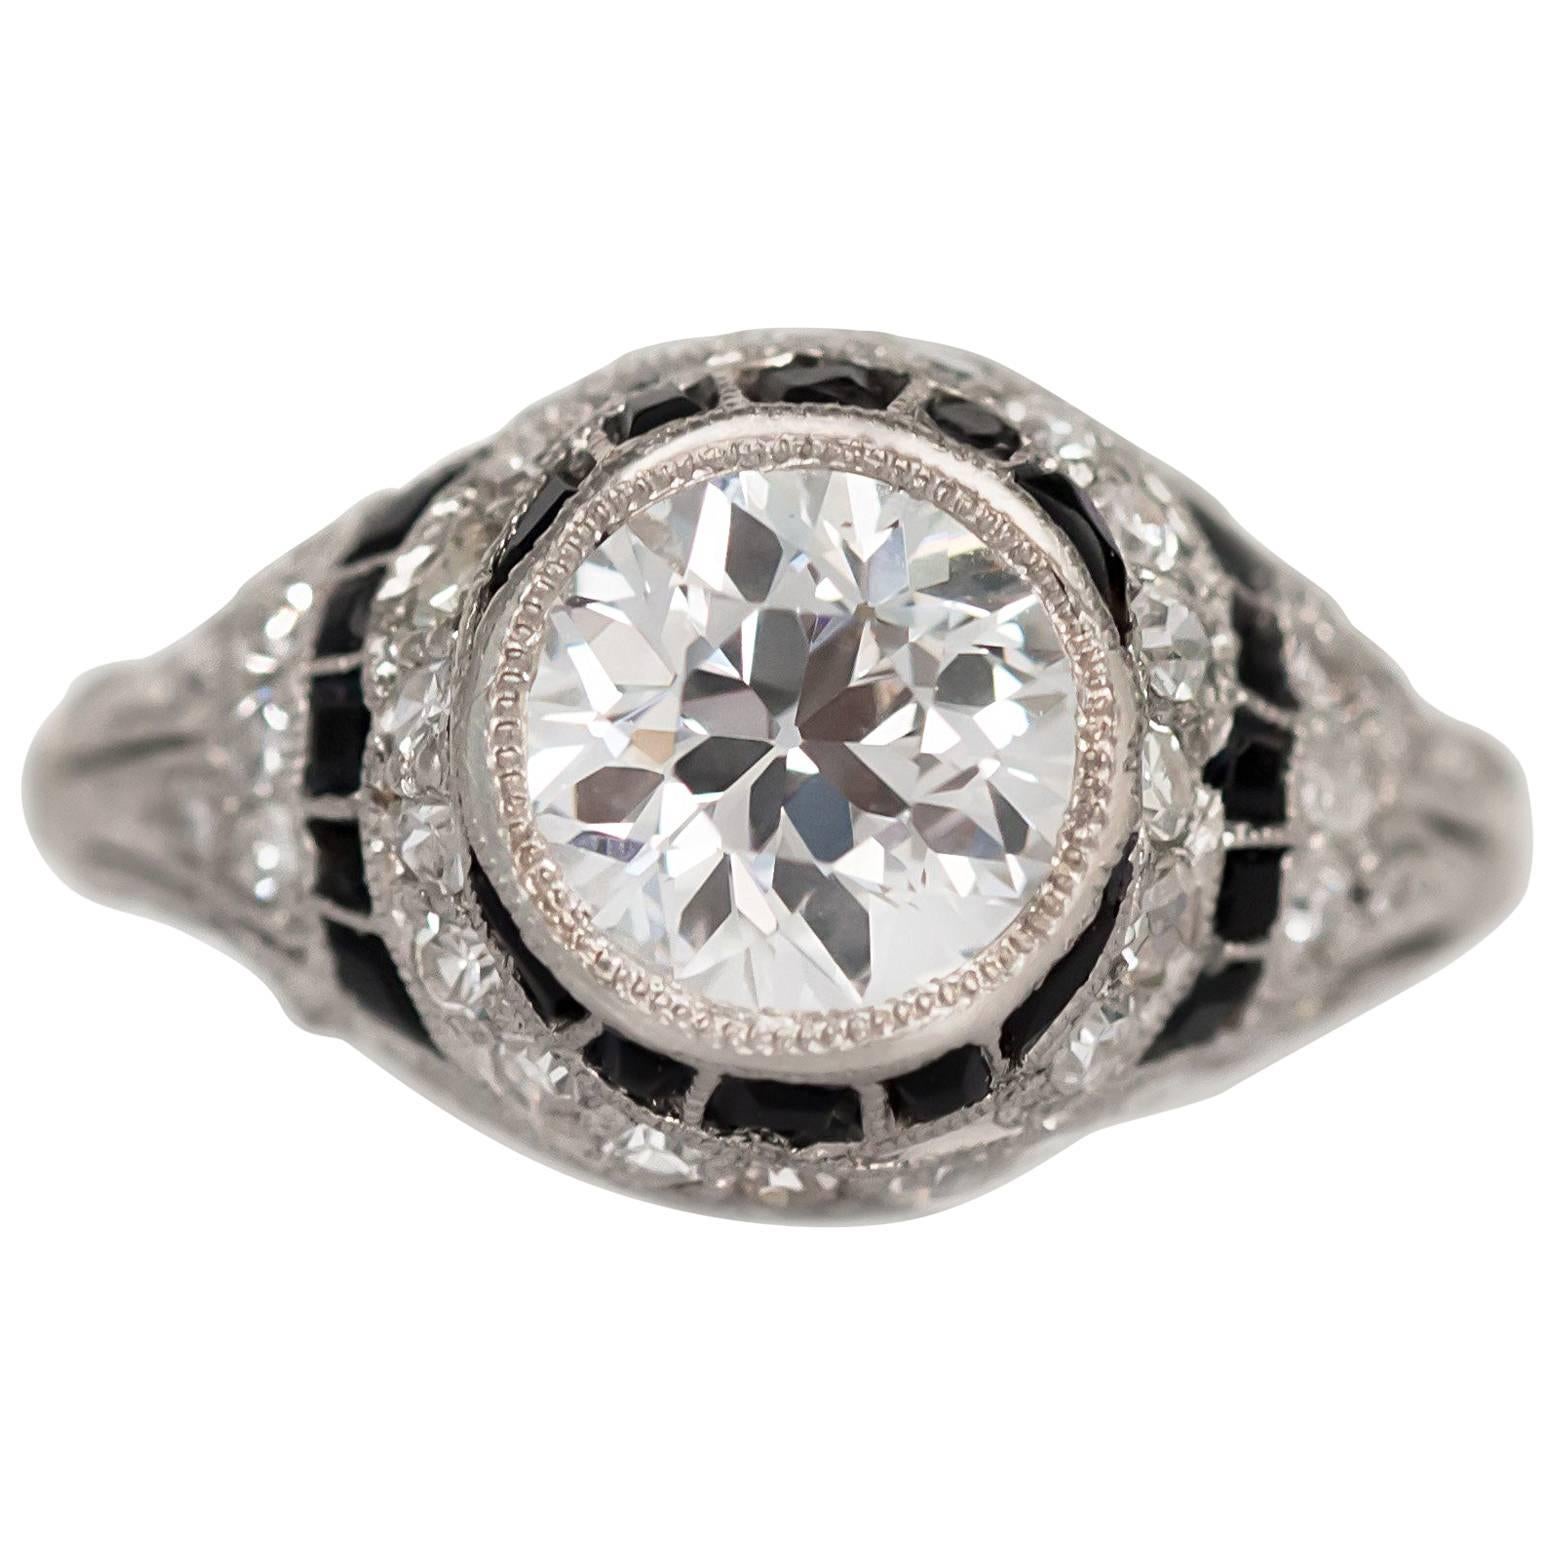 1.11 GIA Certified Carat Diamond, Onyx Platinum Engagement Ring, 1920s Art Deco